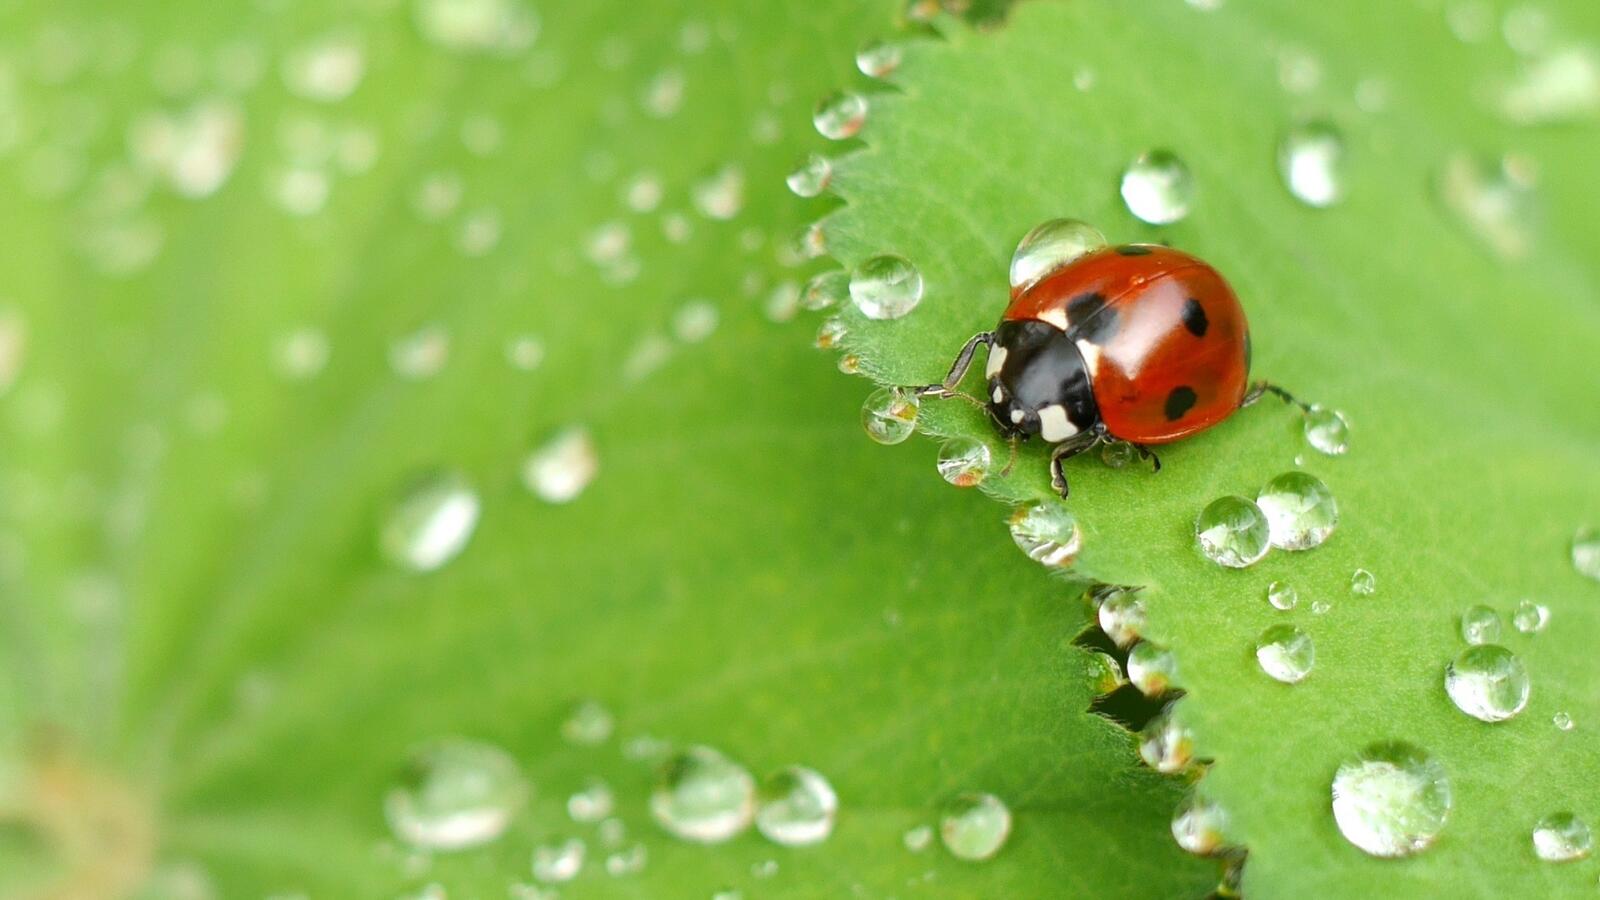 Free photo A ladybug crawls on a green leaf after the rain